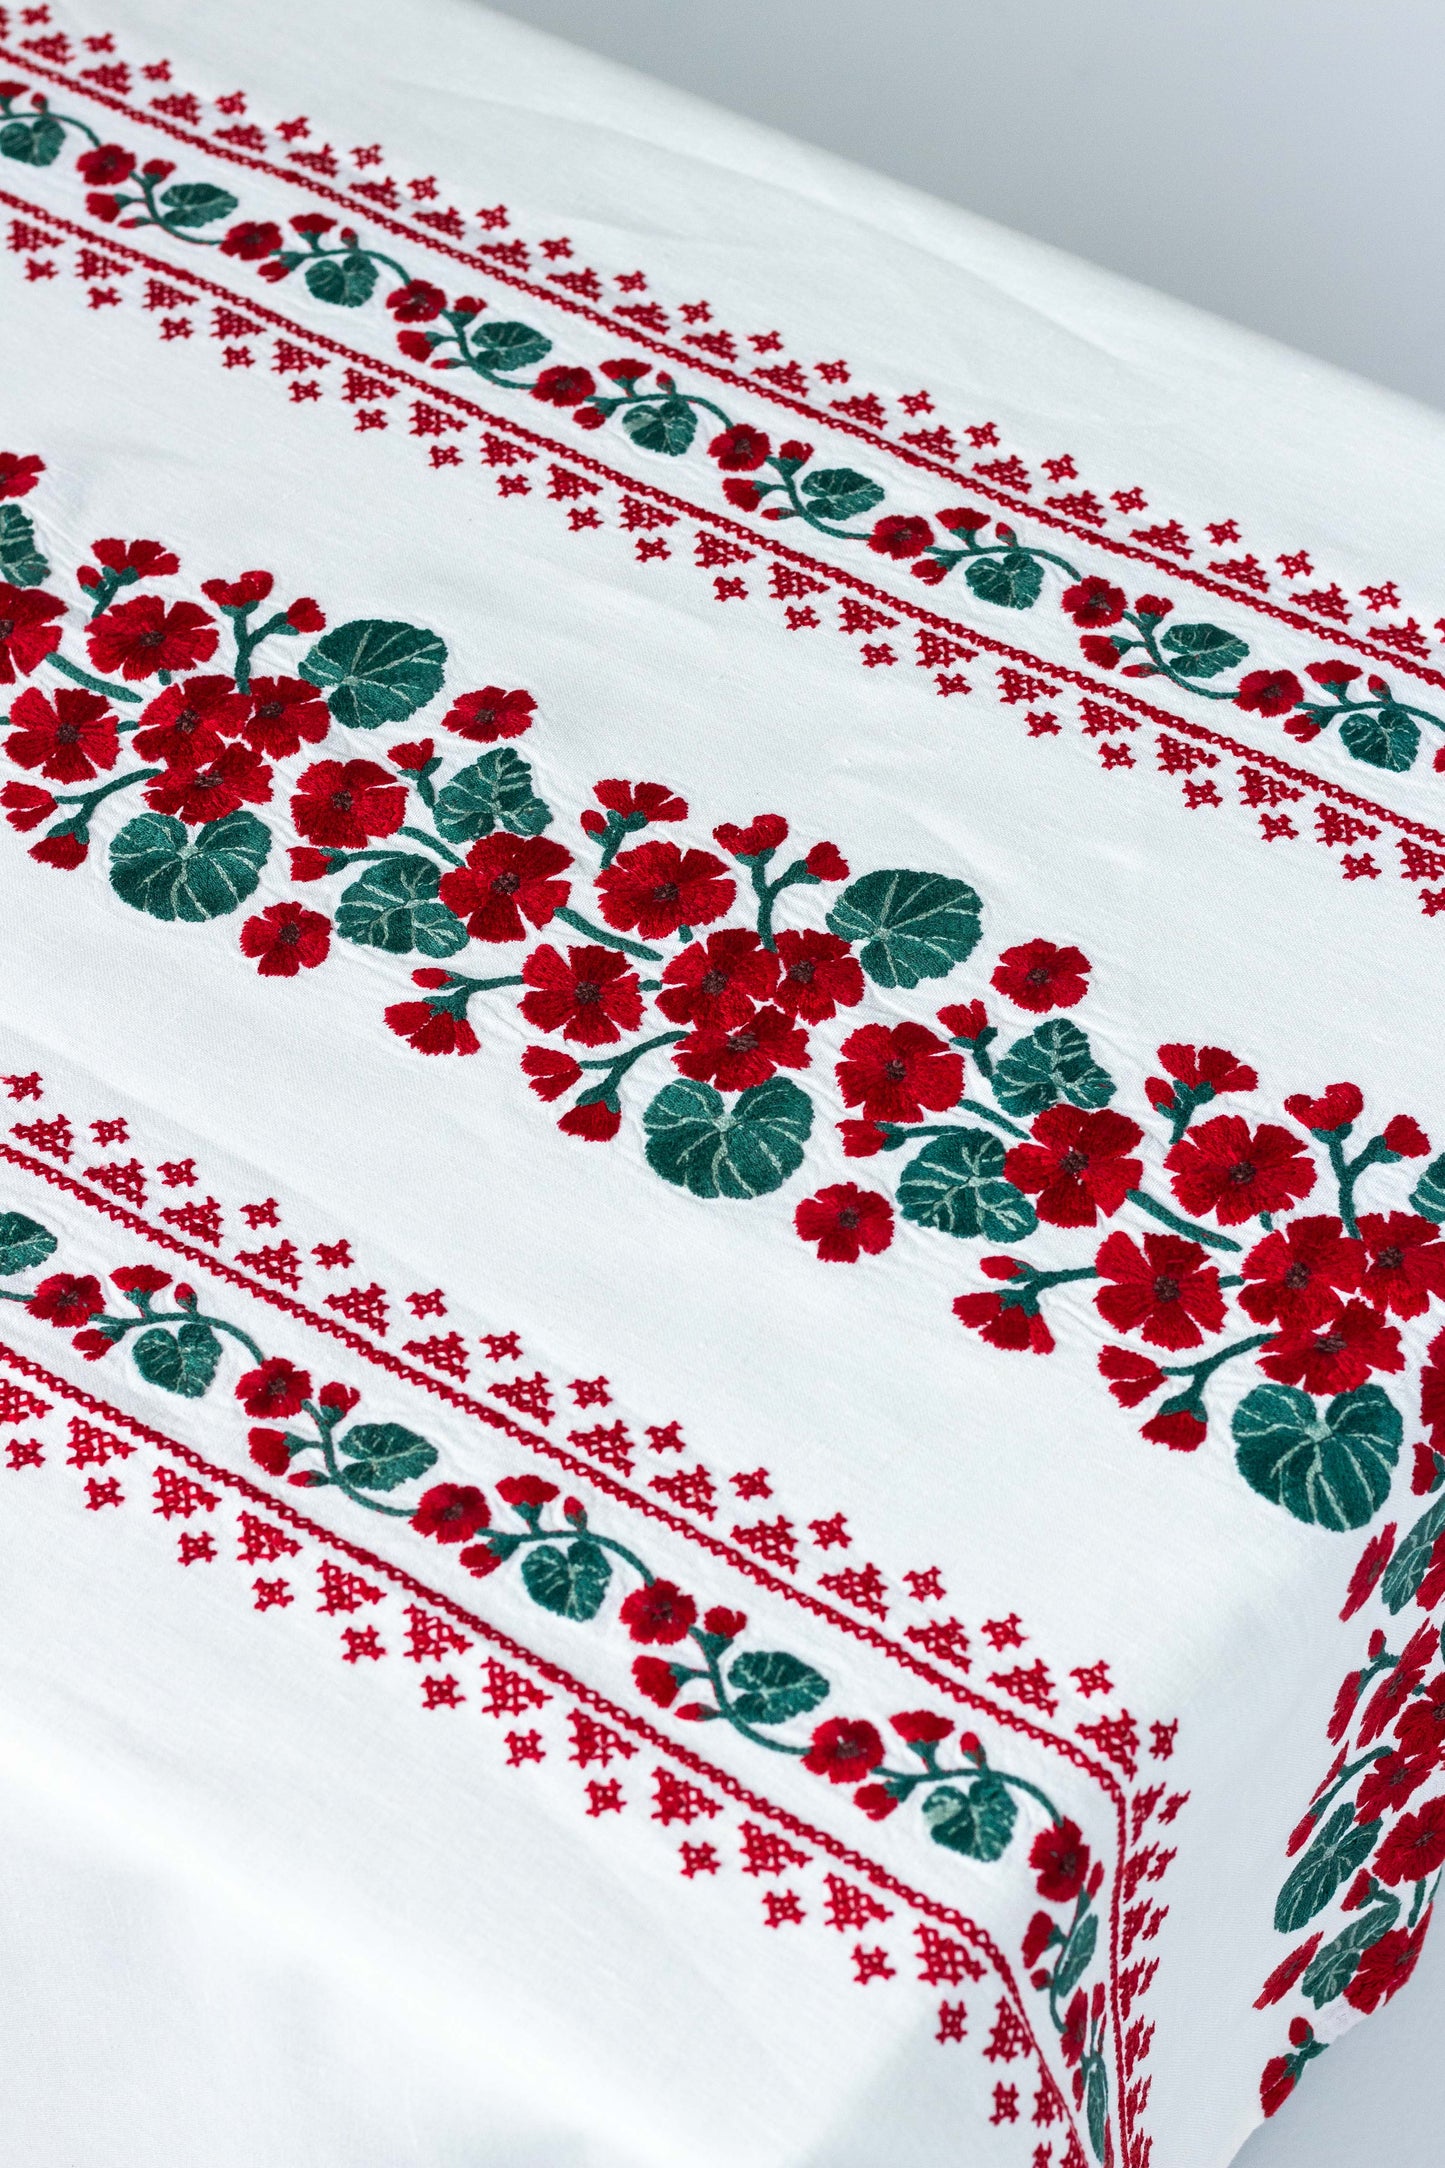 Geranio Rectangular Tablecloth for 10